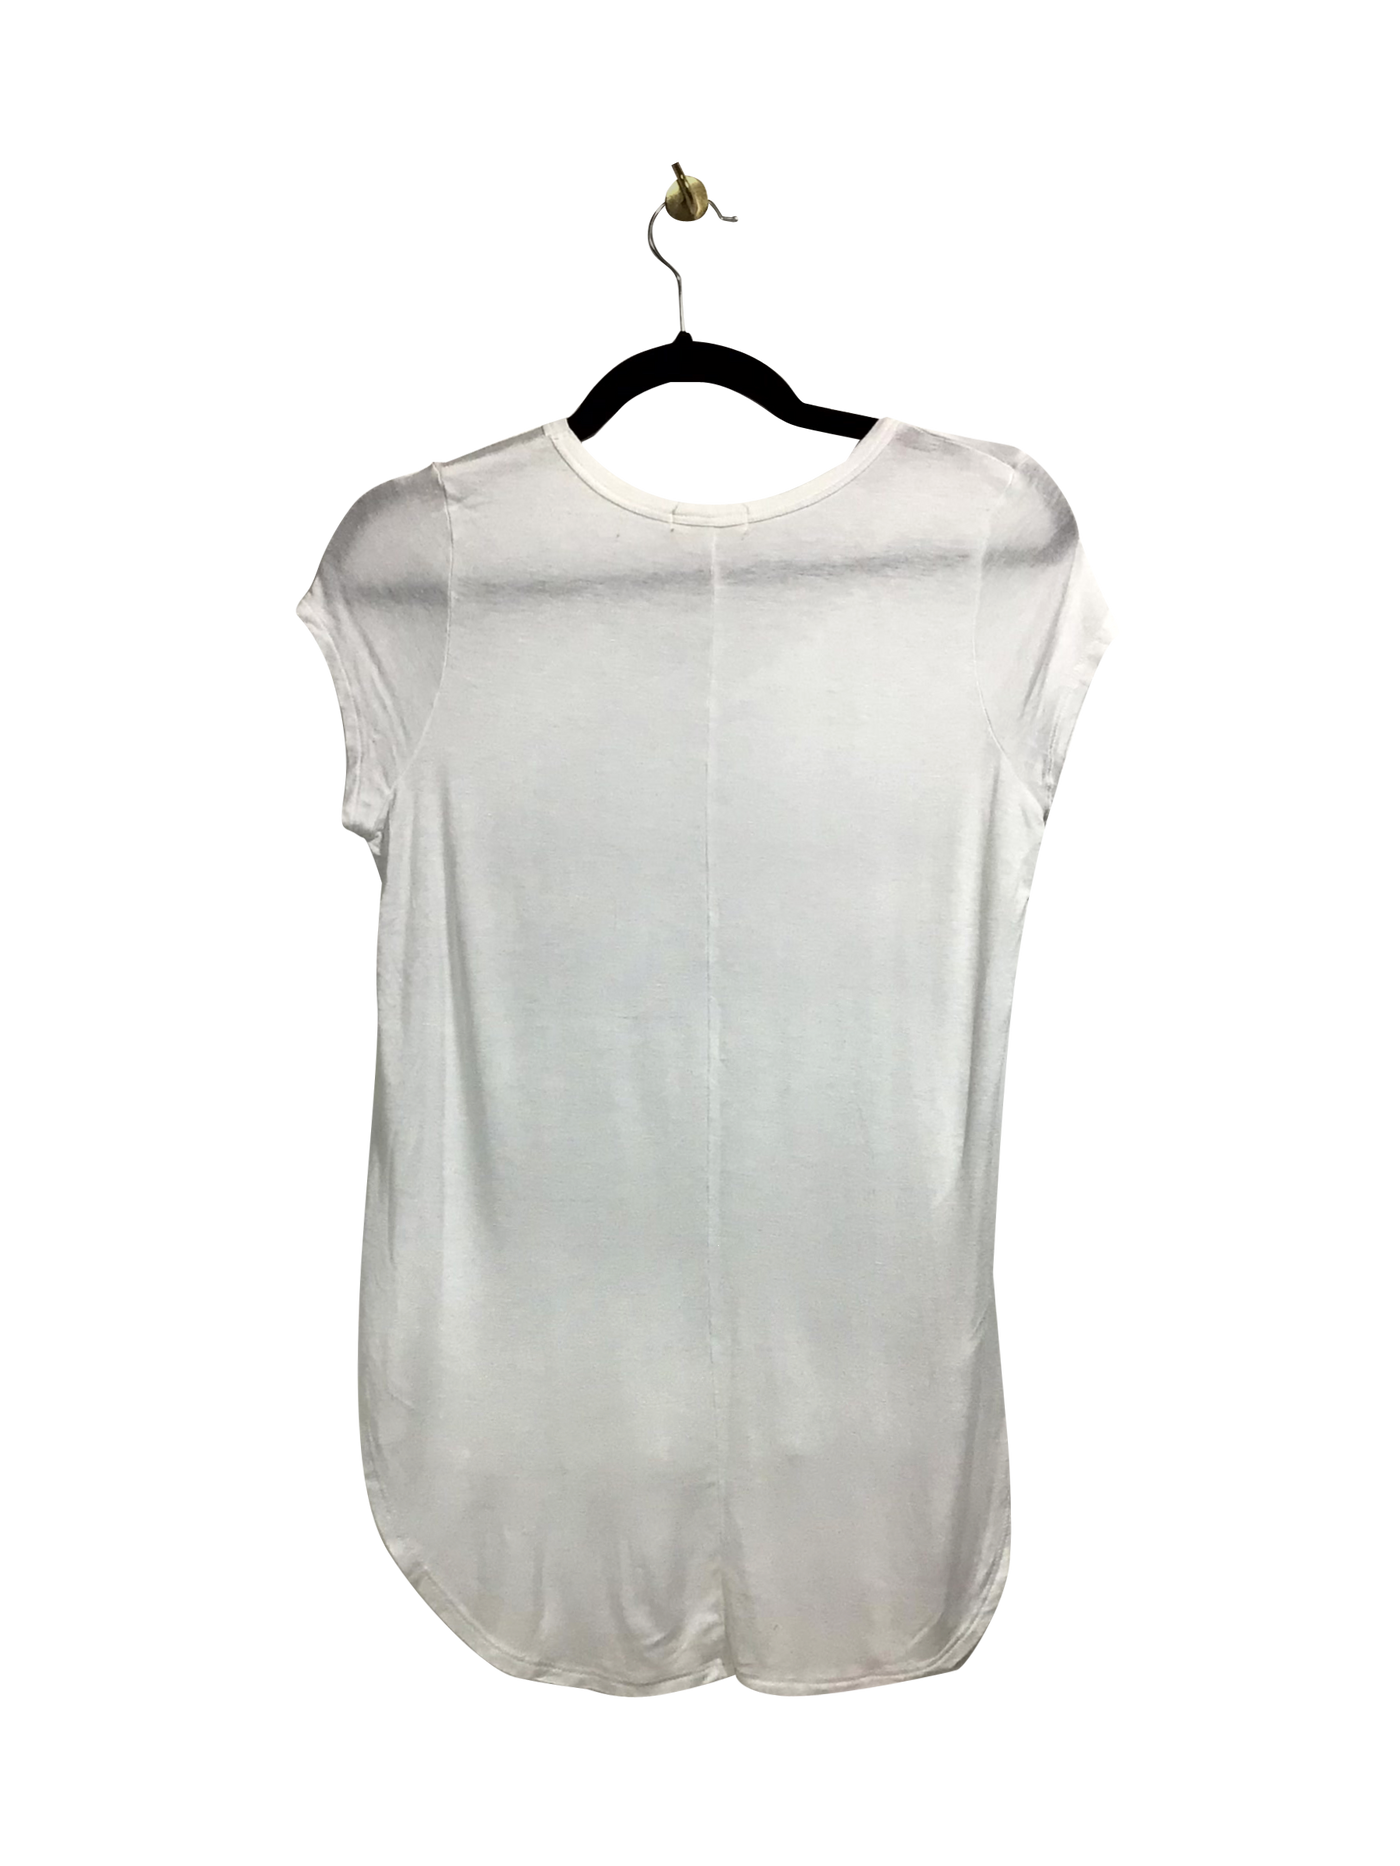 OCCASION Regular fit T-shirt in White  -  M  8.99 Koop